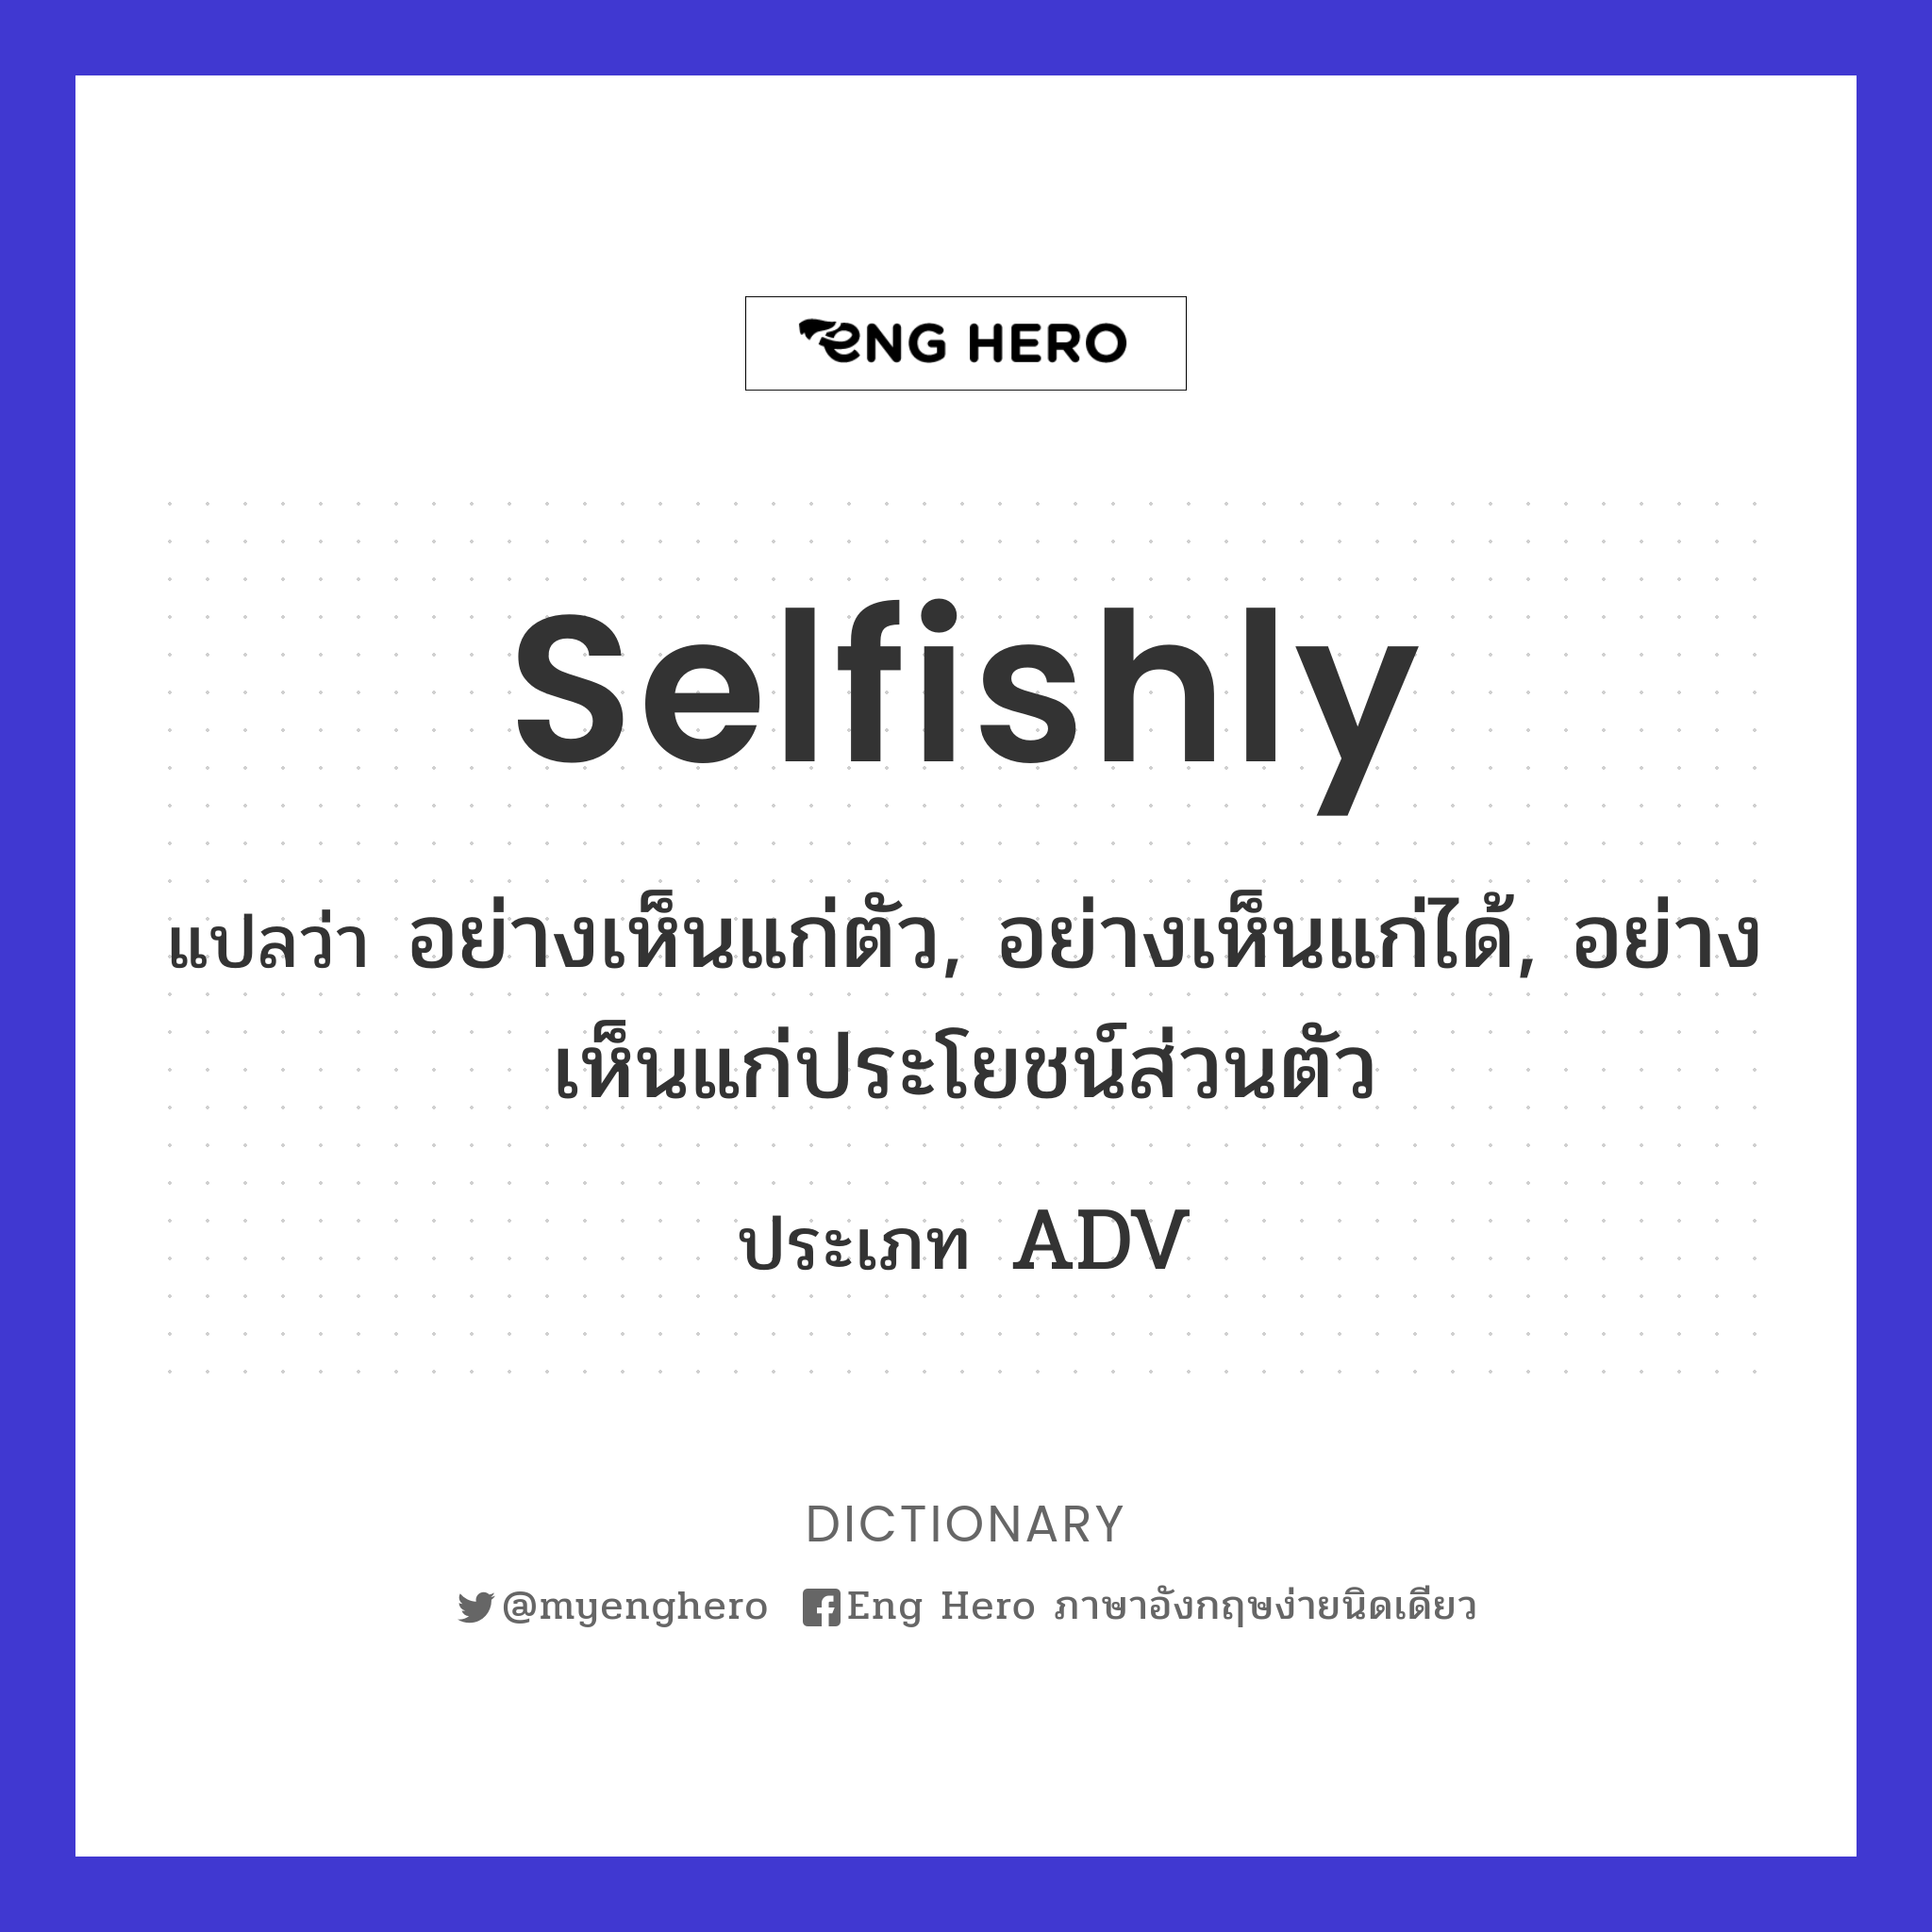 selfishly